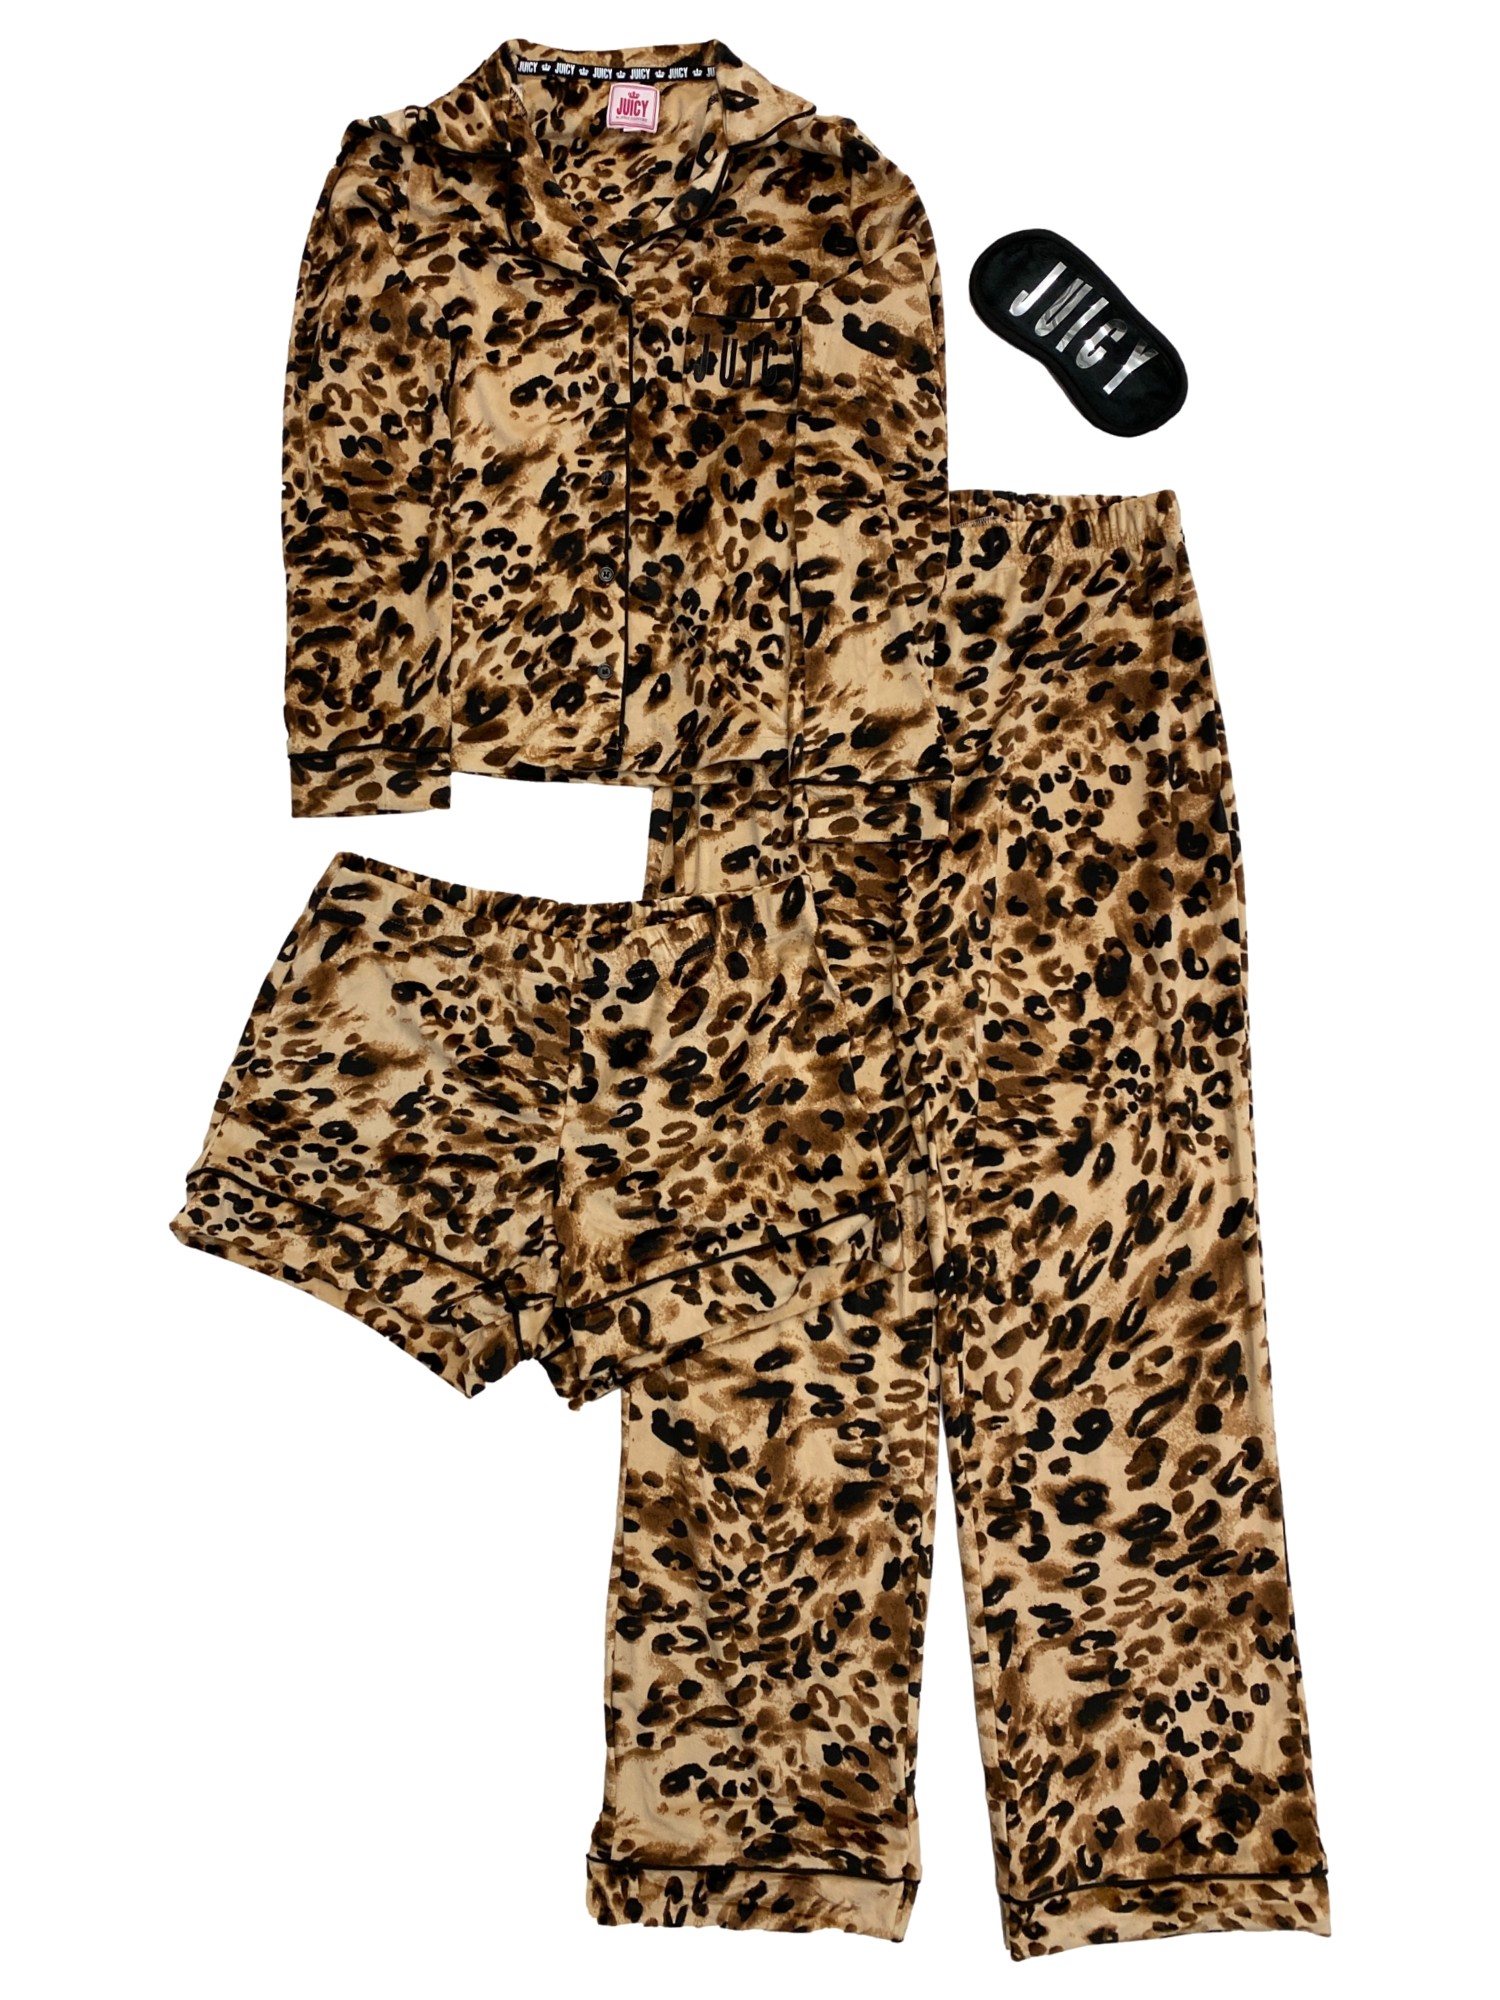 Juicy Couture Womens Plush Leopard Pajamas Shorts Pants Top Sleep mask Set